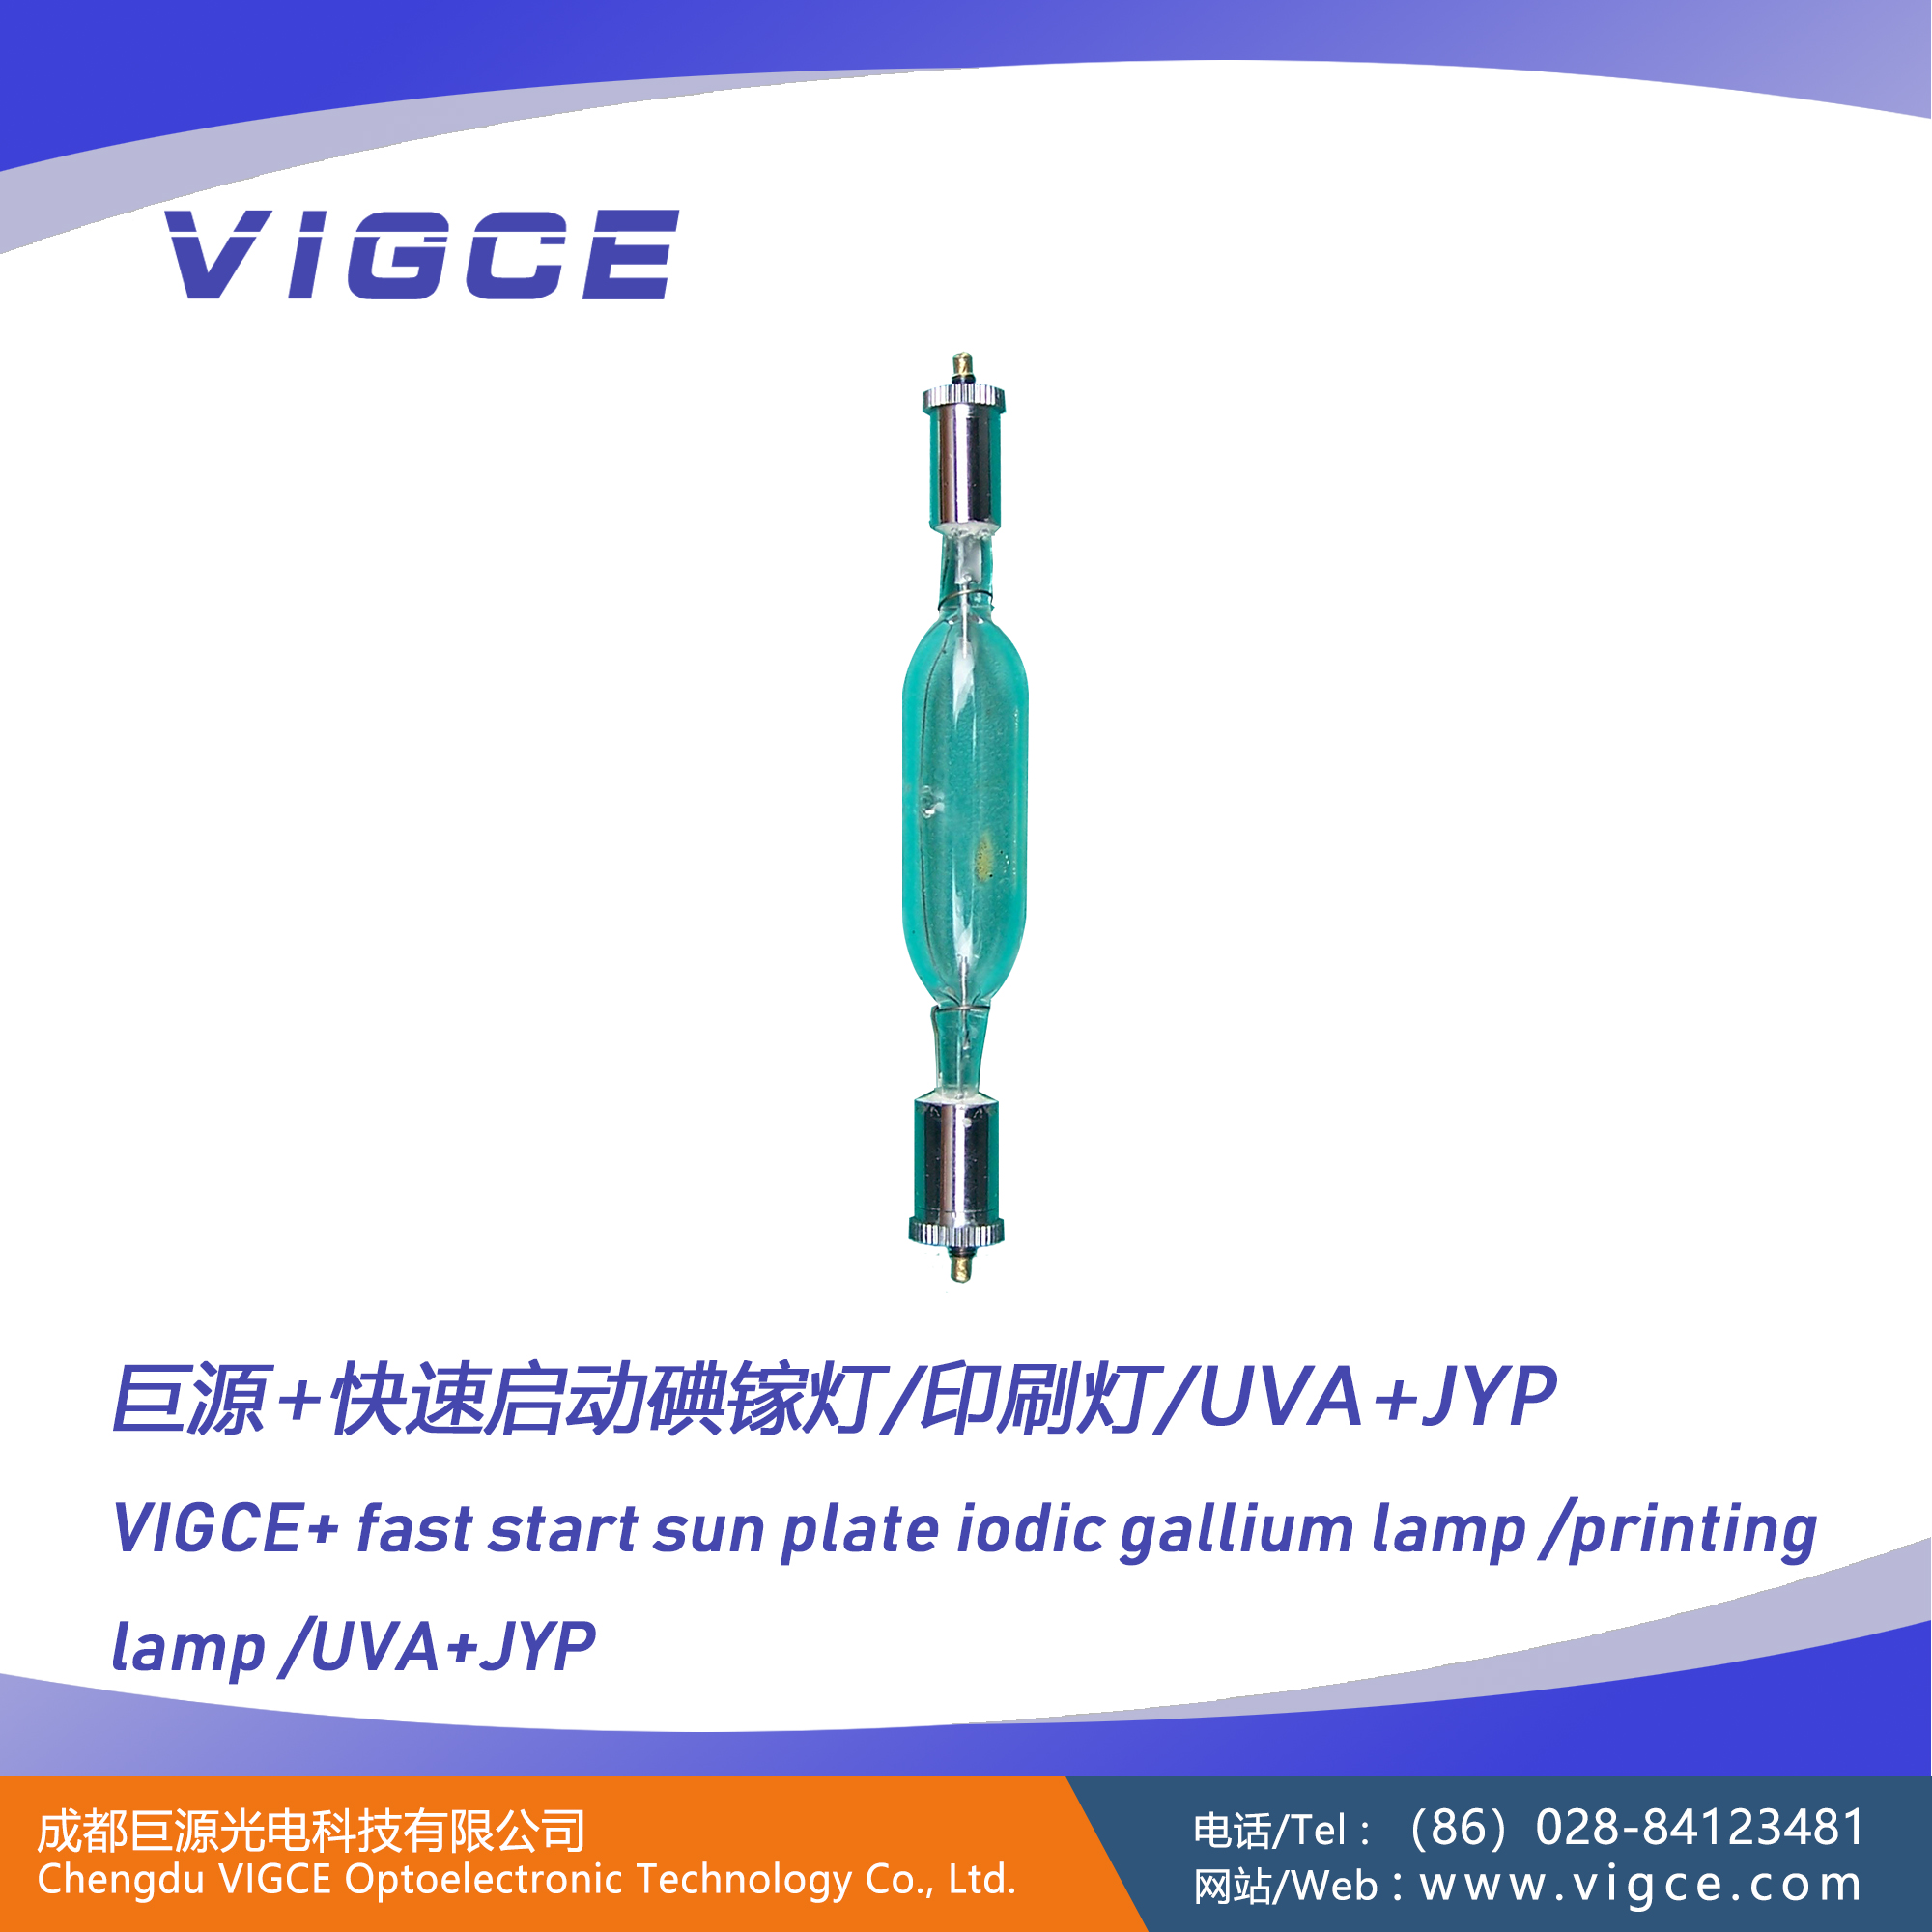 VIGCE+ fast start sun plate iodic gallium lamp /printing lamp /UVA+JYP